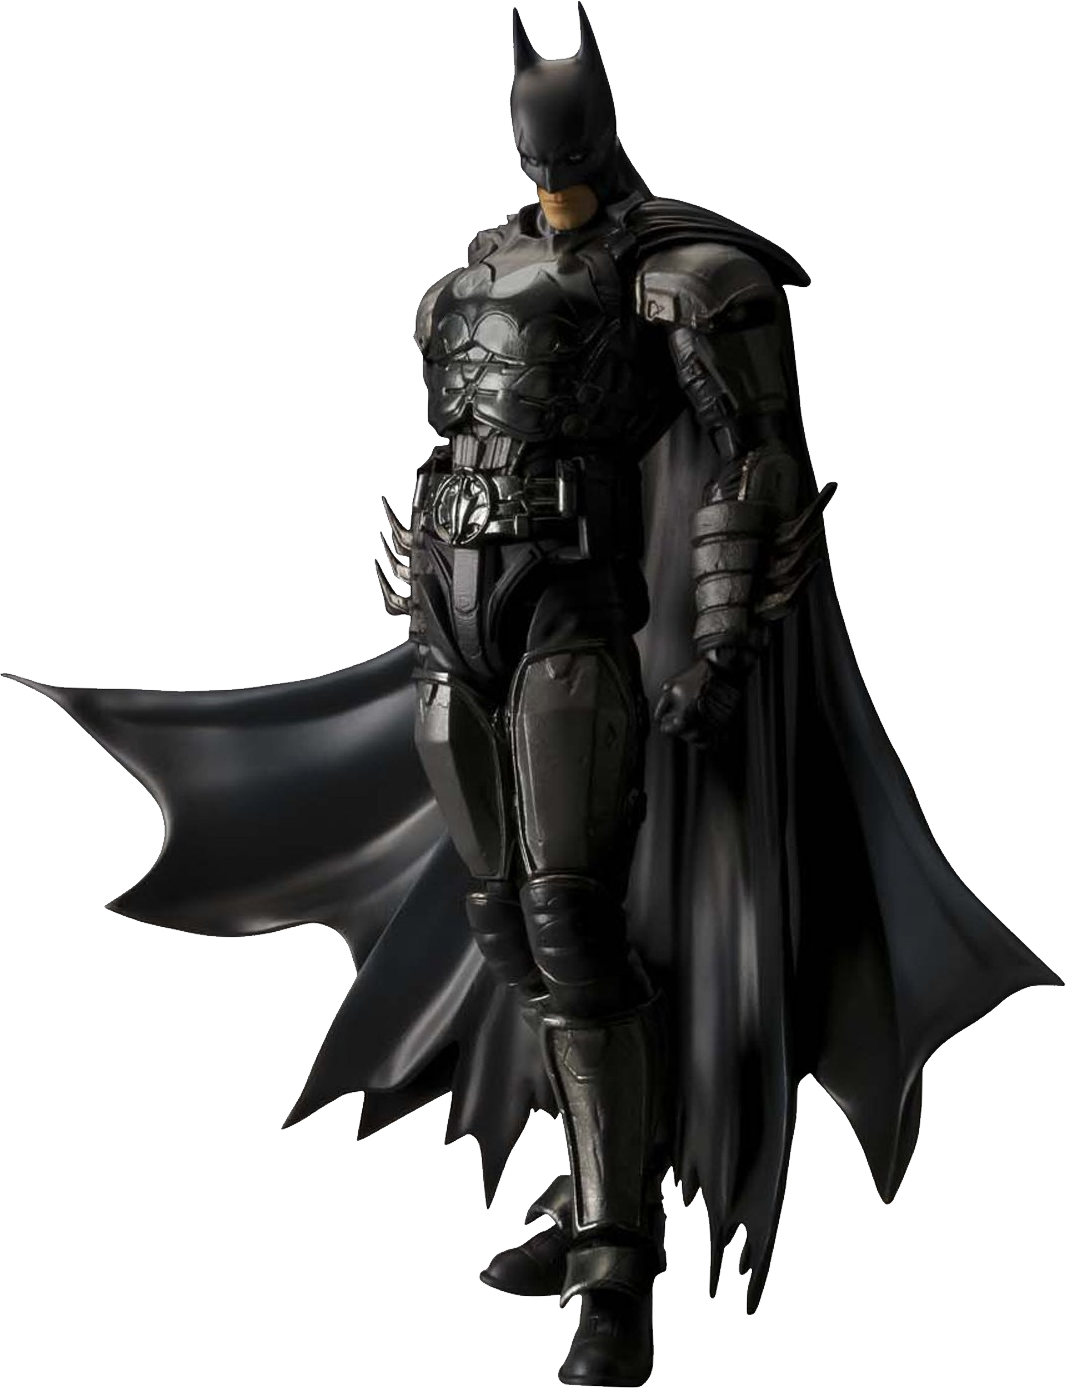 Imagen Transparente de Batman Arkham Knight